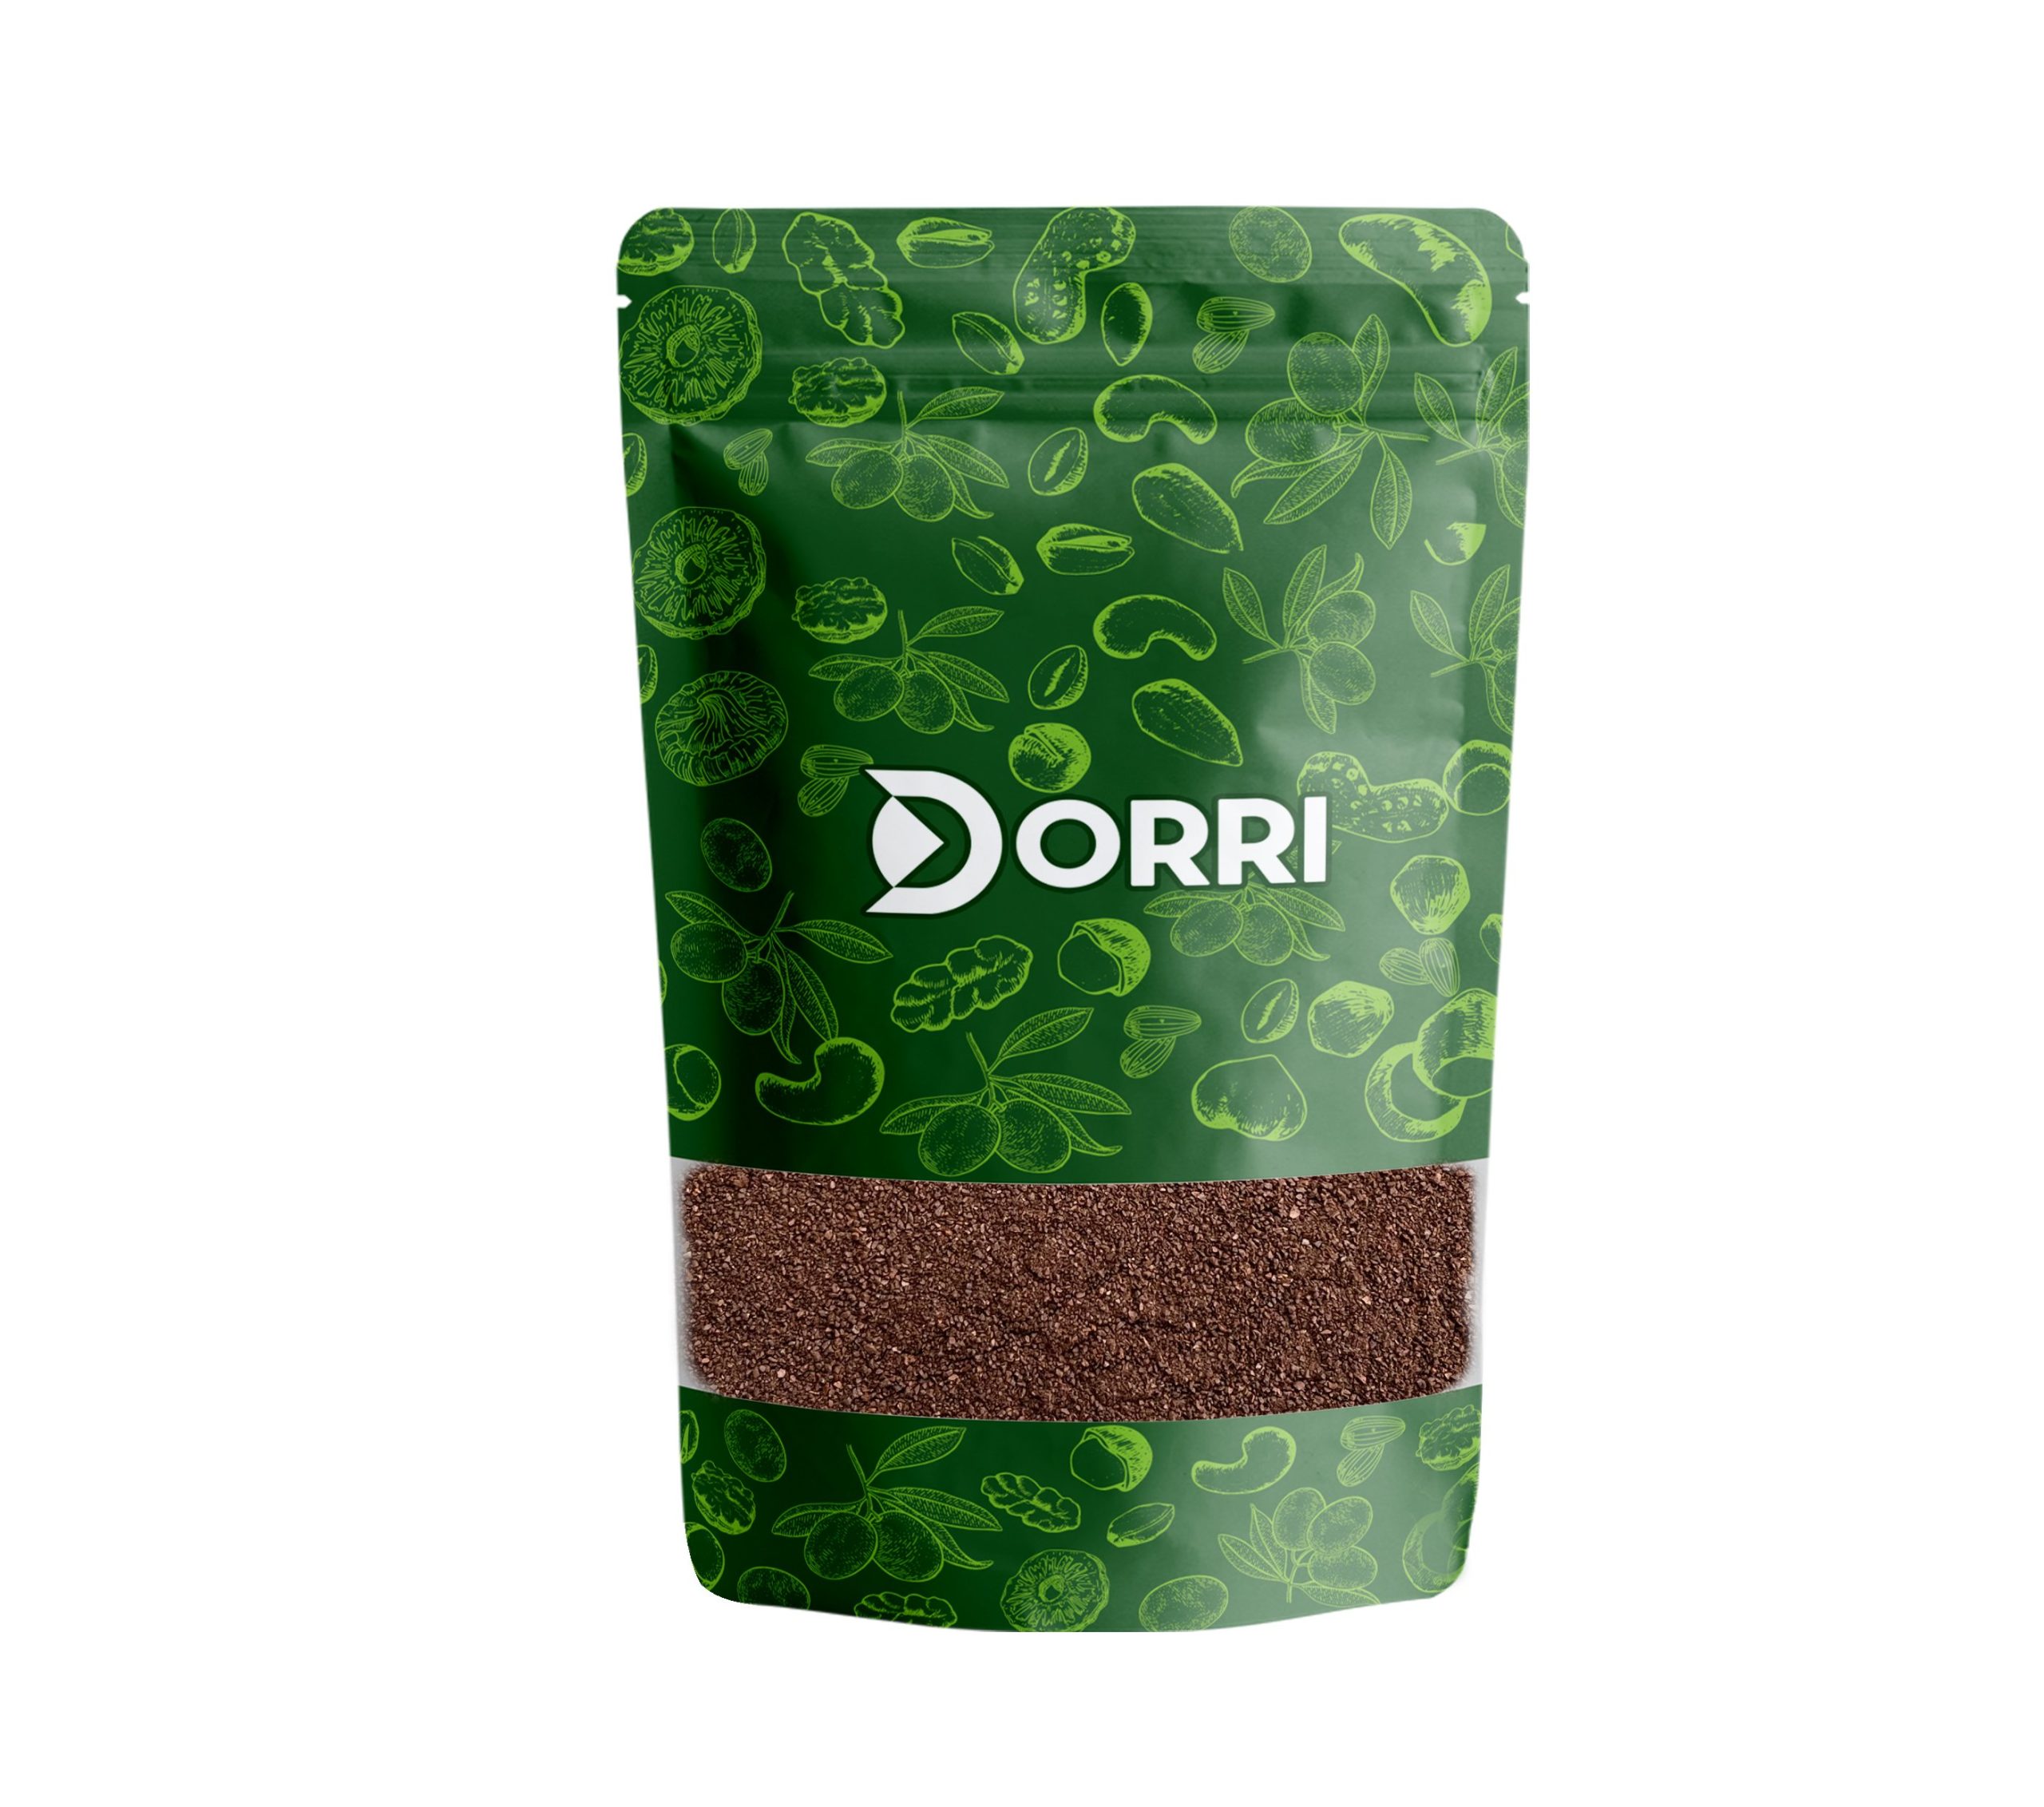 Dorri - Colombian Filter Coffee